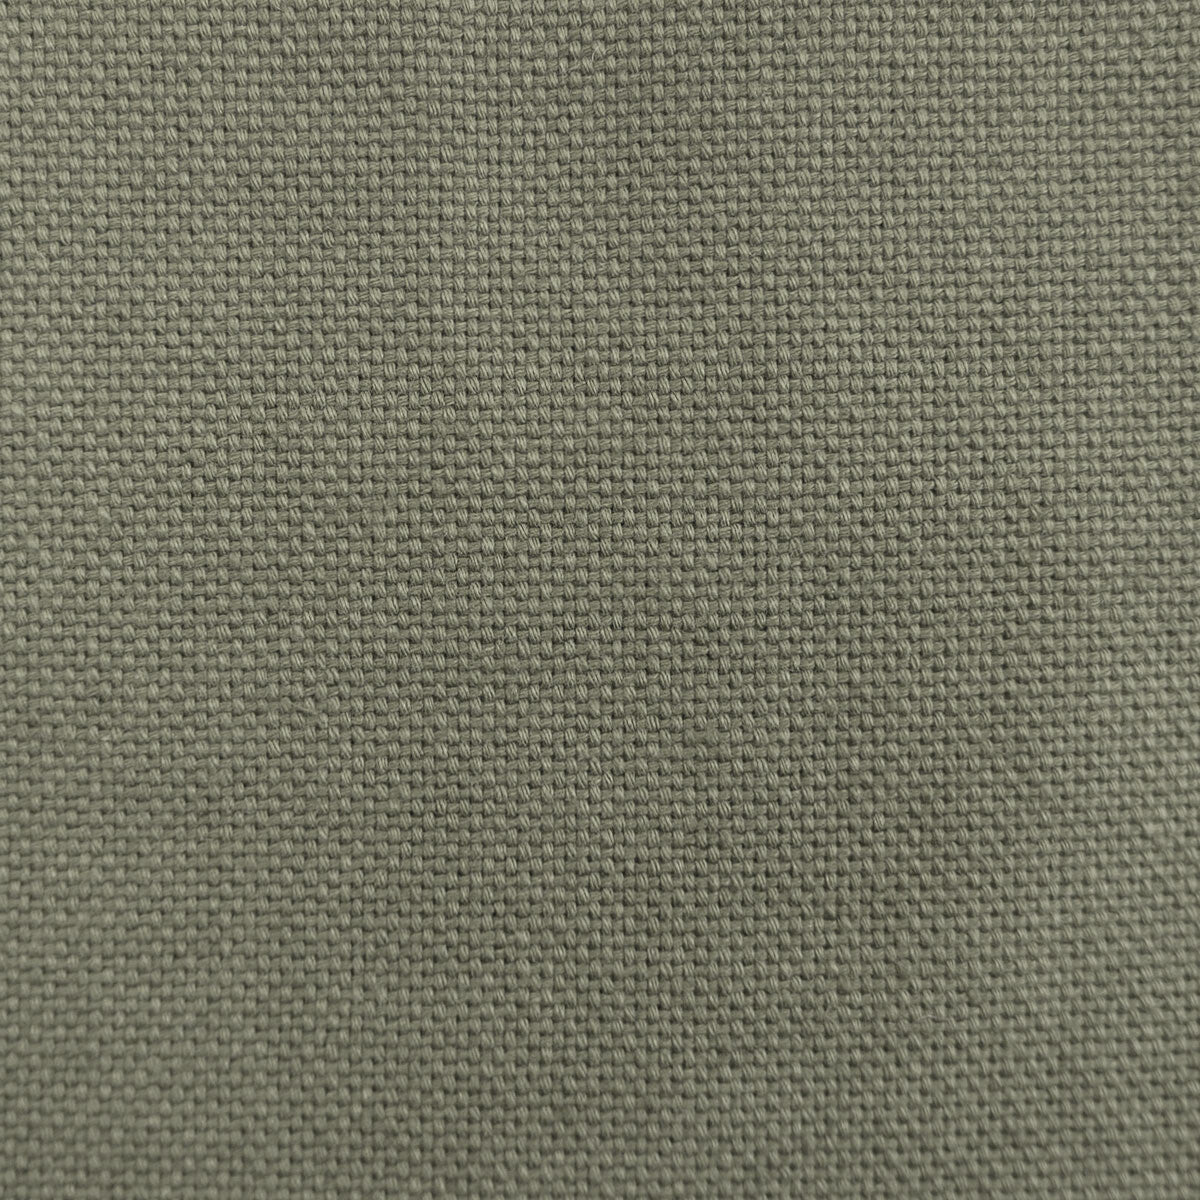 Dobra fabric in gris verdoso color - pattern LCT1075.046.0 - by Gaston y Daniela in the Lorenzo Castillo VII The Rectory collection